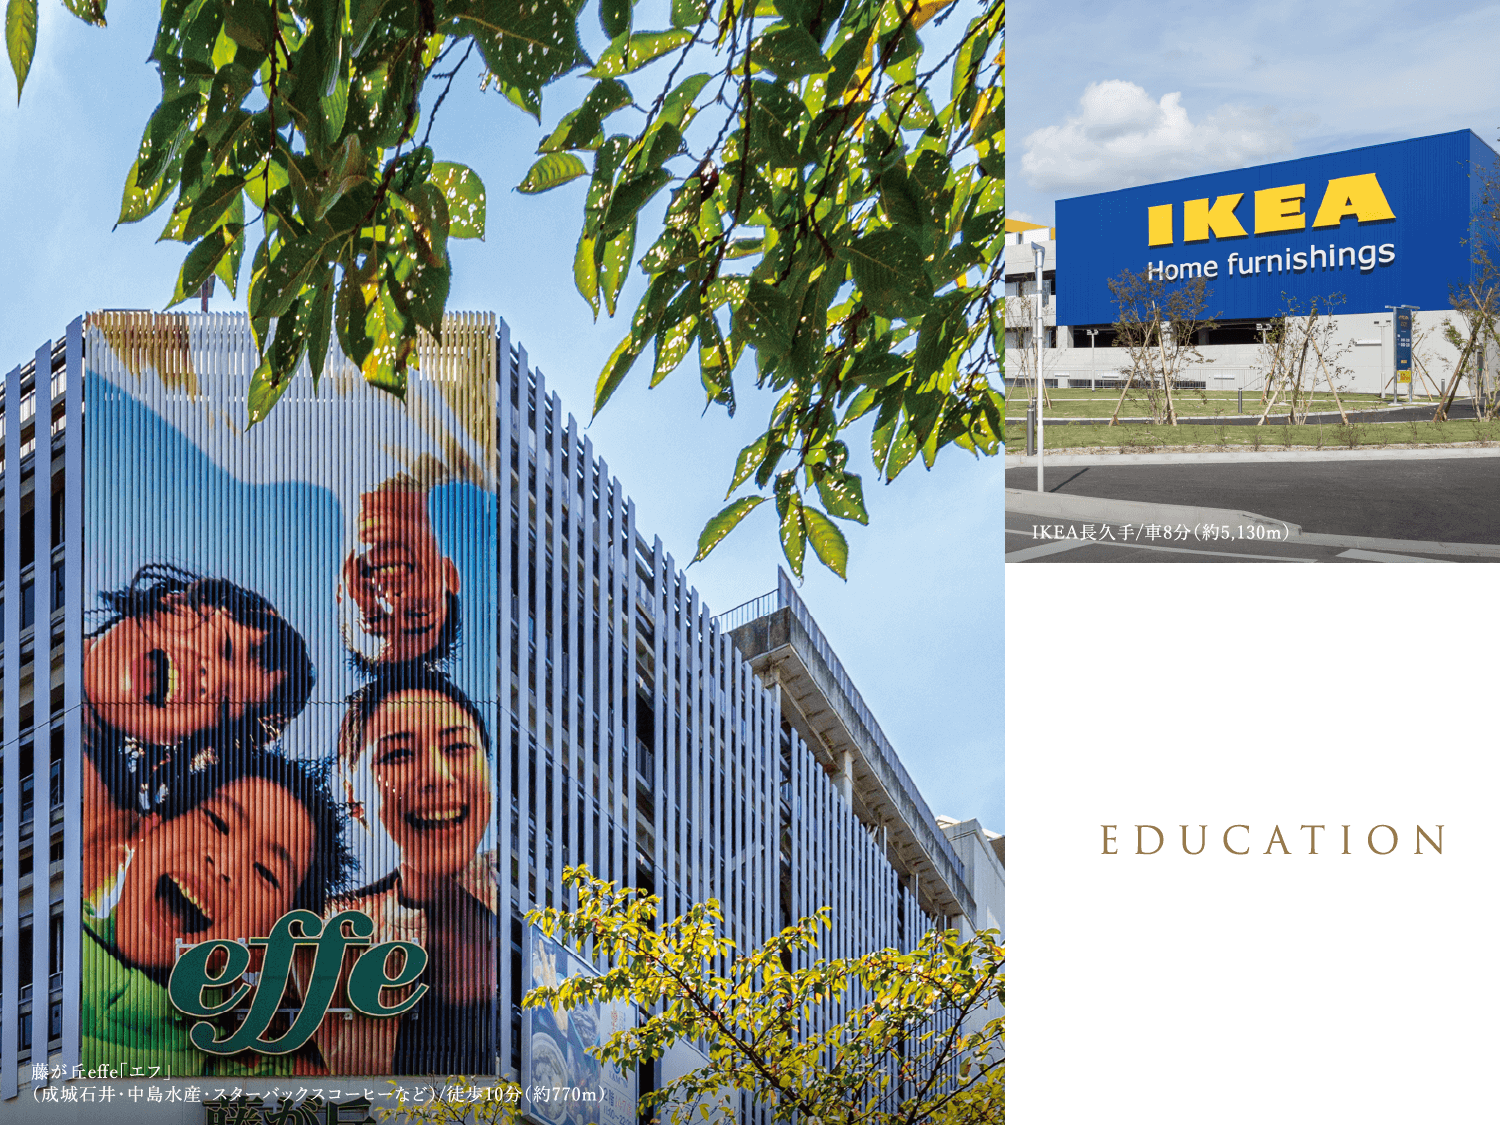 EDUCATION 藤が丘effe「エフ」（成城石井・中島水産・スターバックスコーヒーなど）/徒歩10分（約770m） IKEA長久手/車8分（約5,130m）